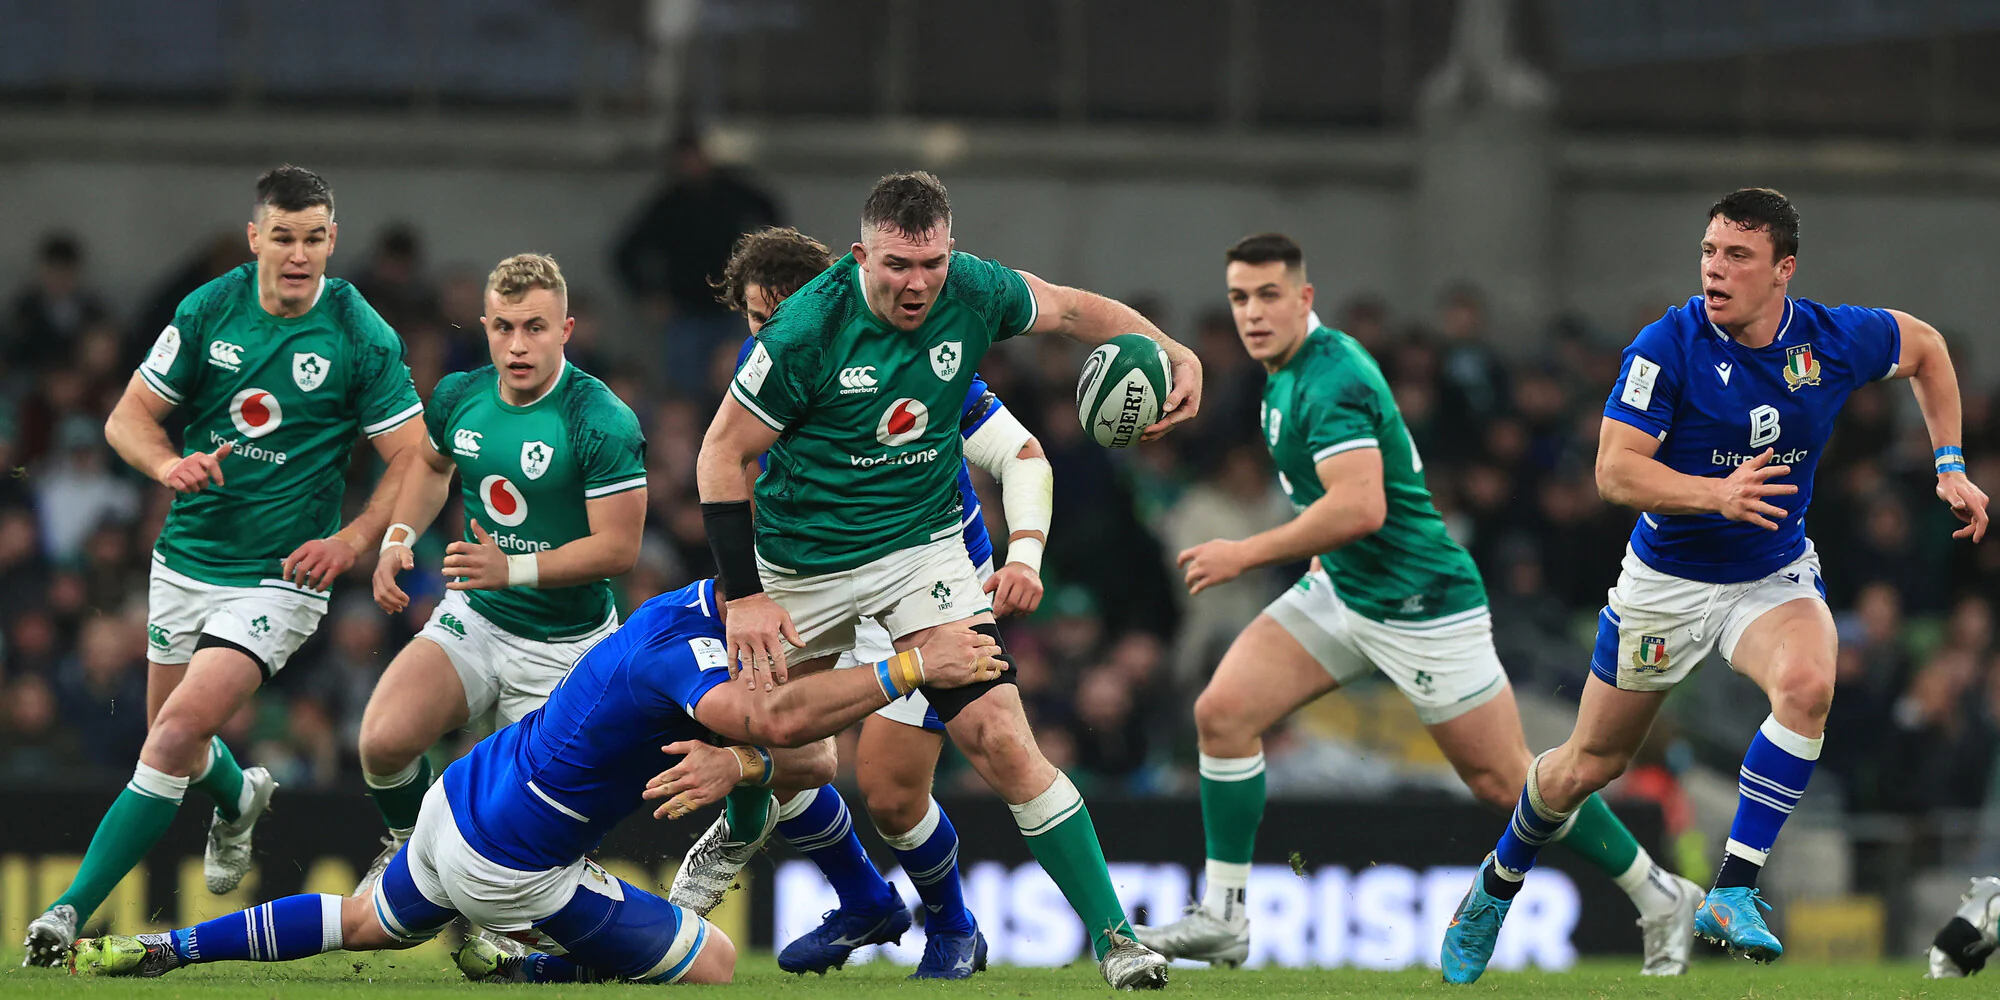 Six countries, Italy's crushing defeat: Ireland won 57-6